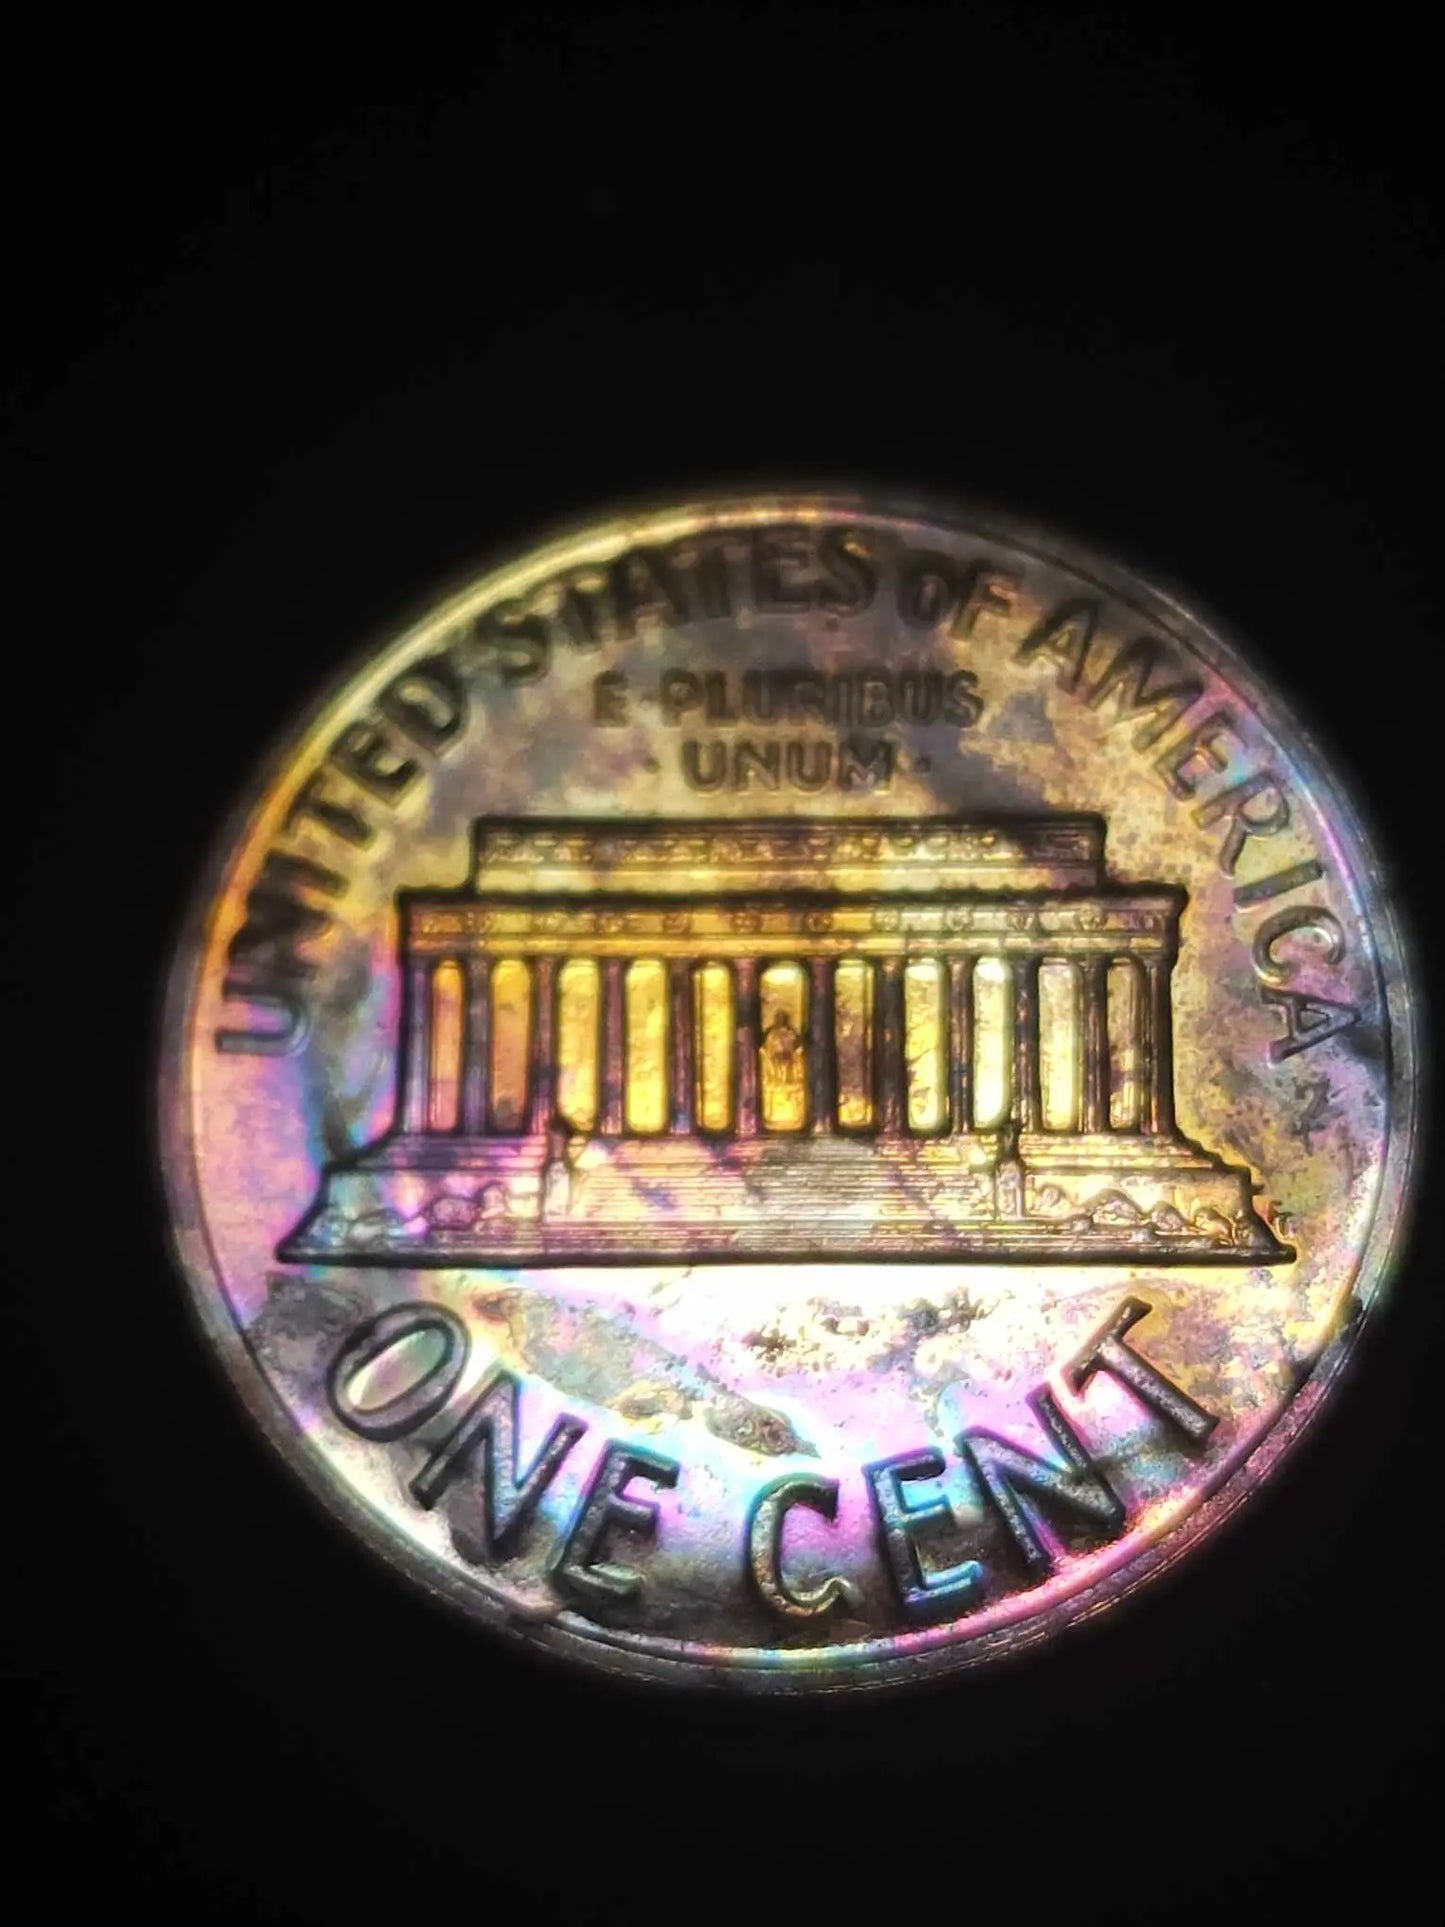 1961 Proof Lincoln Memorial Cent Bu Rainbow Toned Errors & Oddities